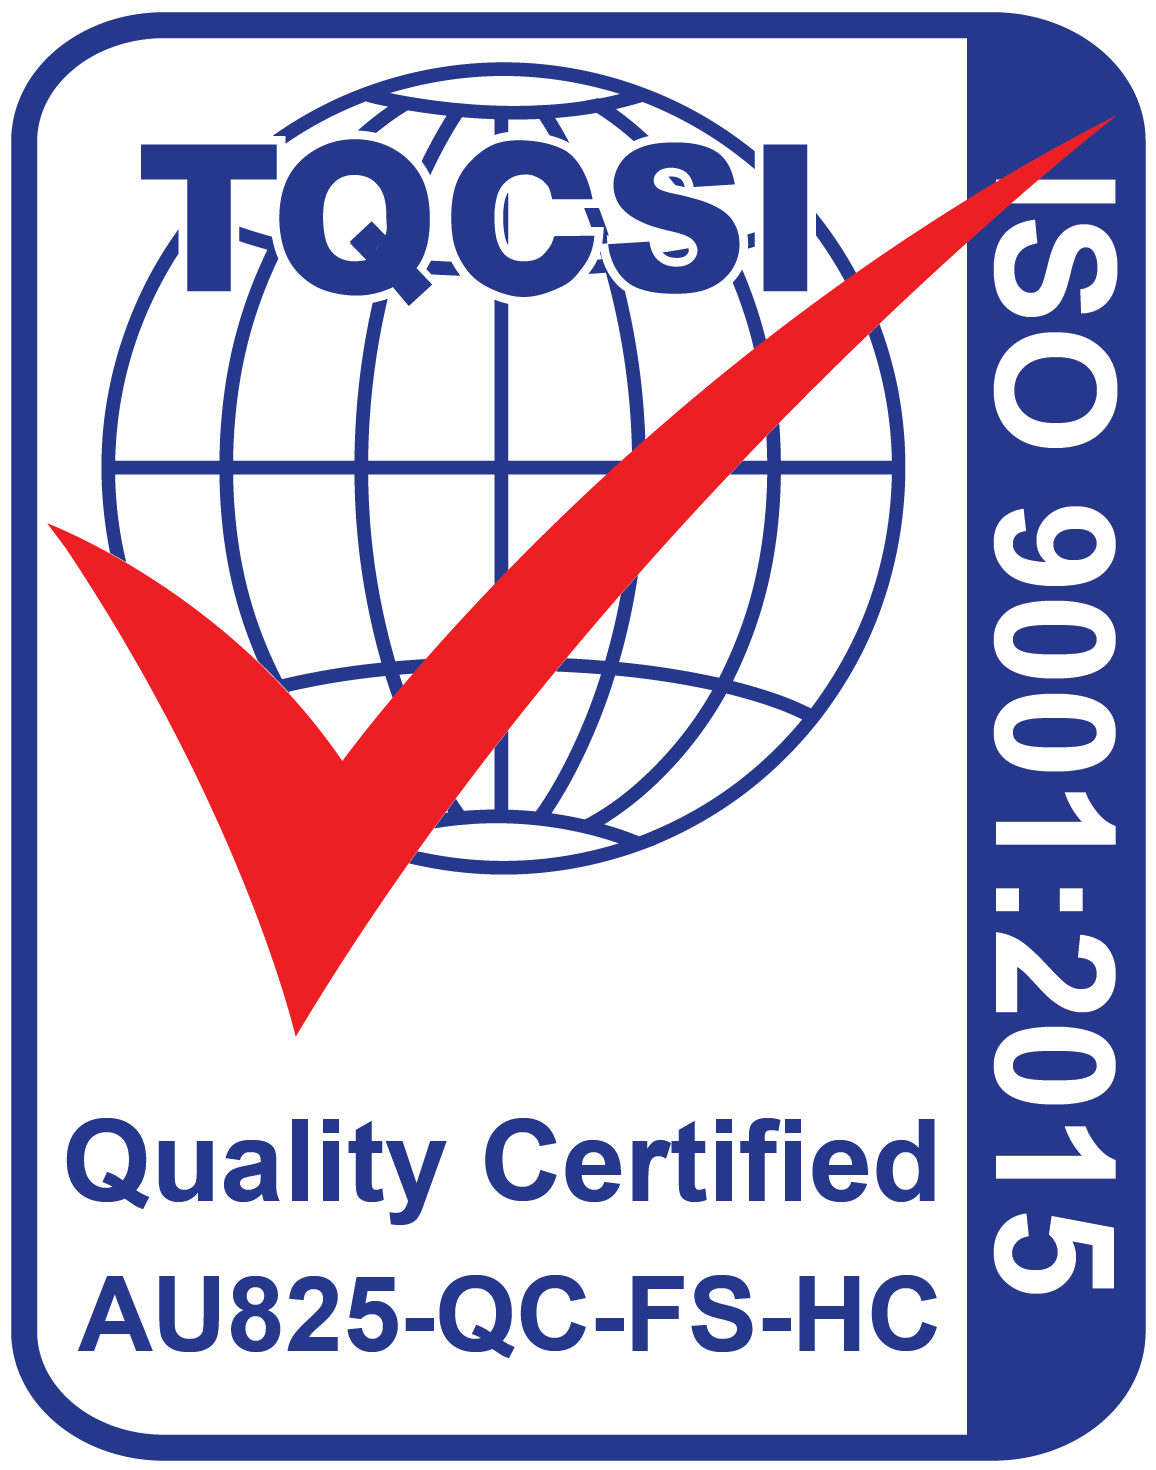 AU825-QC-FS-HC ISO 9001-2015 Certification Mark Artboard-01